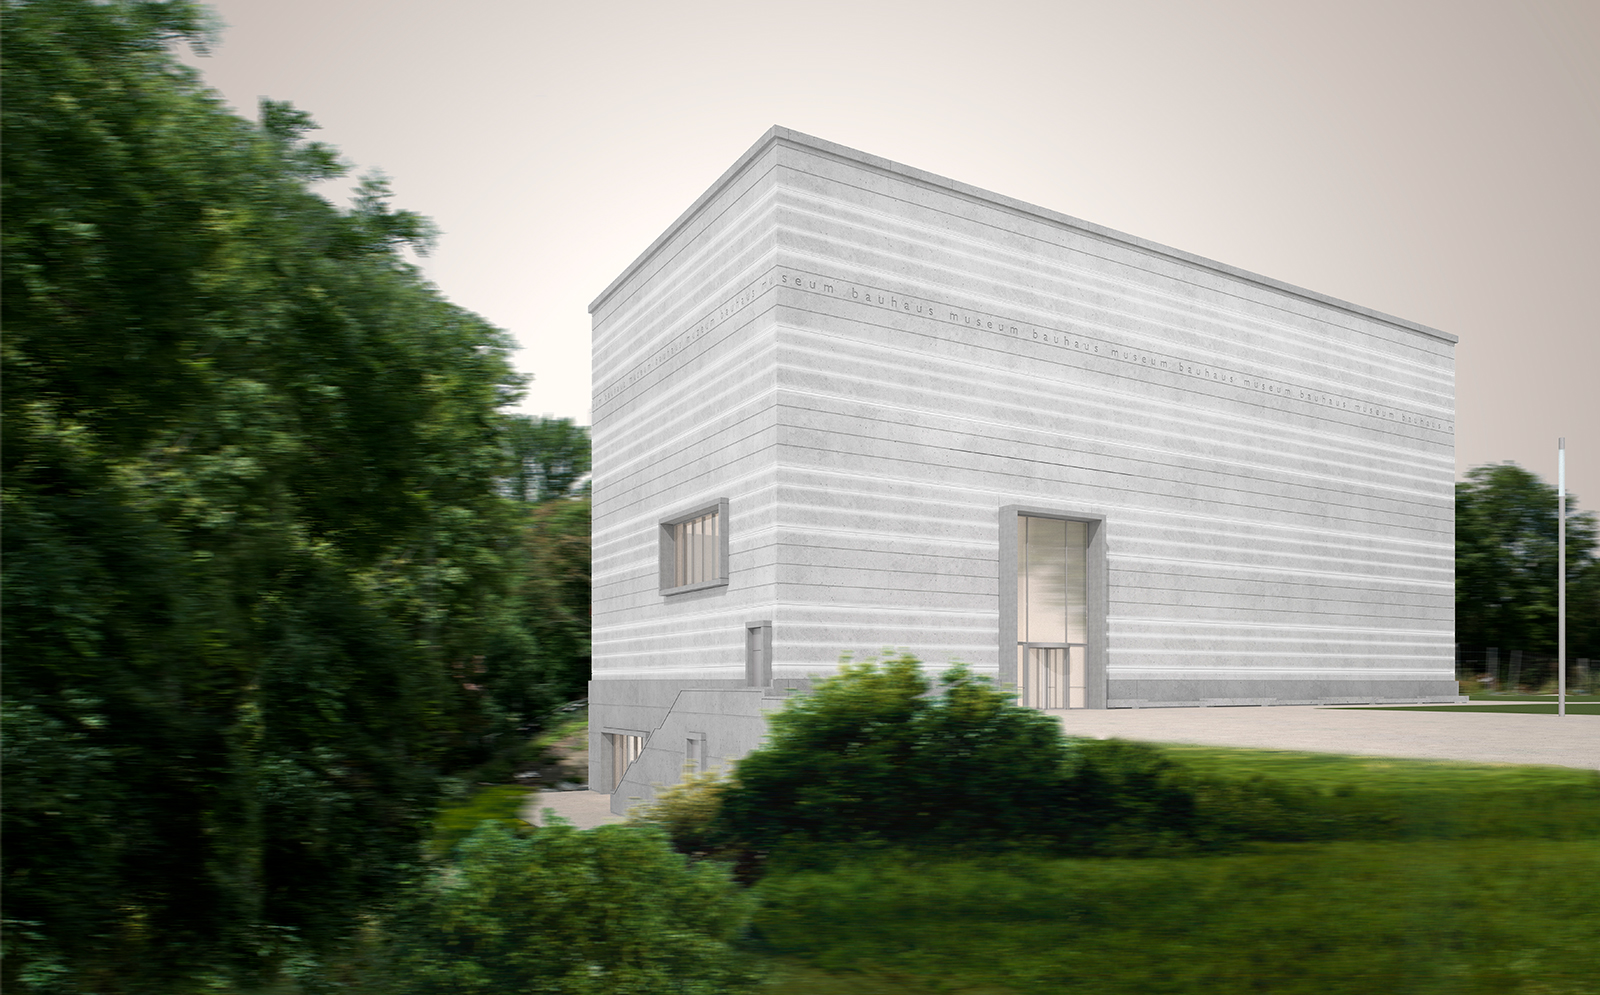 Where to experience the Bauhaus in 2019: the Bauhaus Museum Dessau